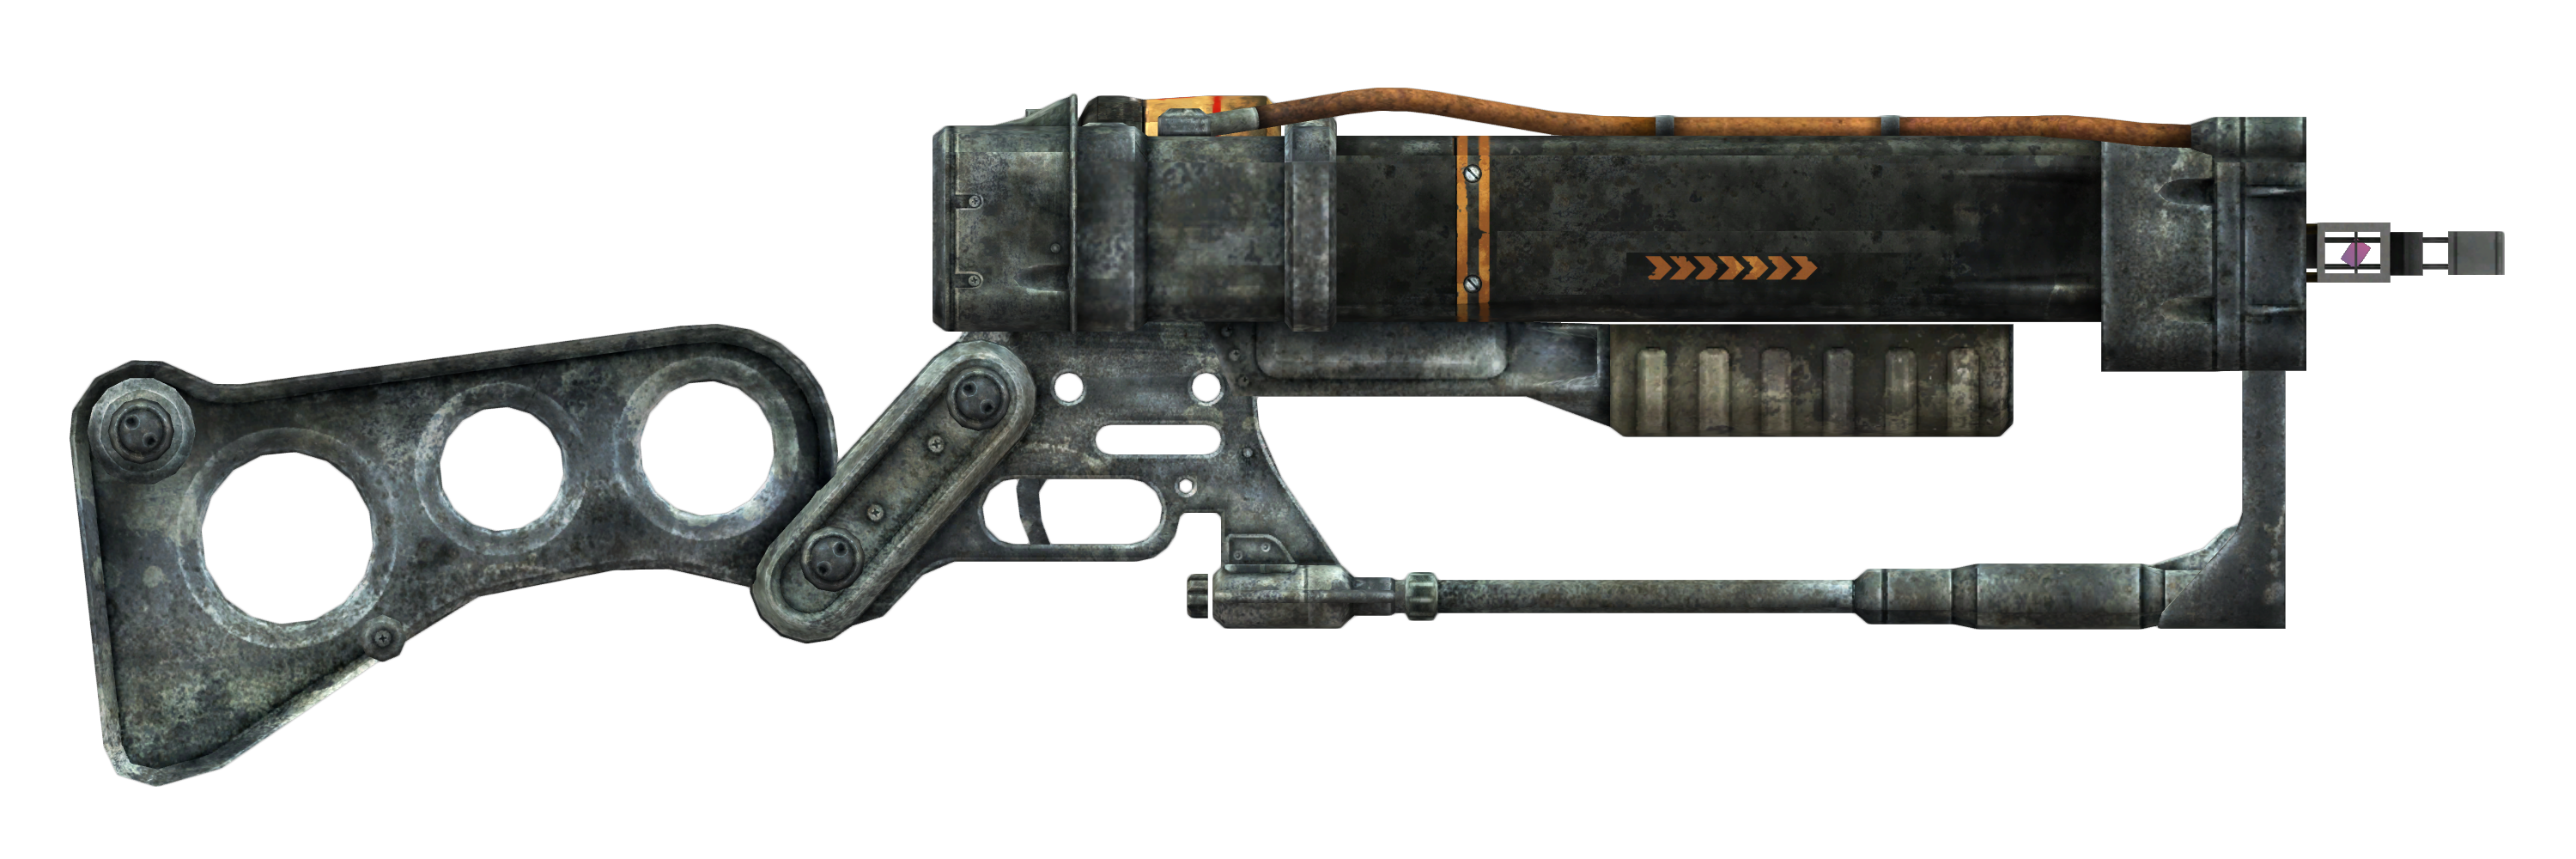 fallout 2 laser rifle